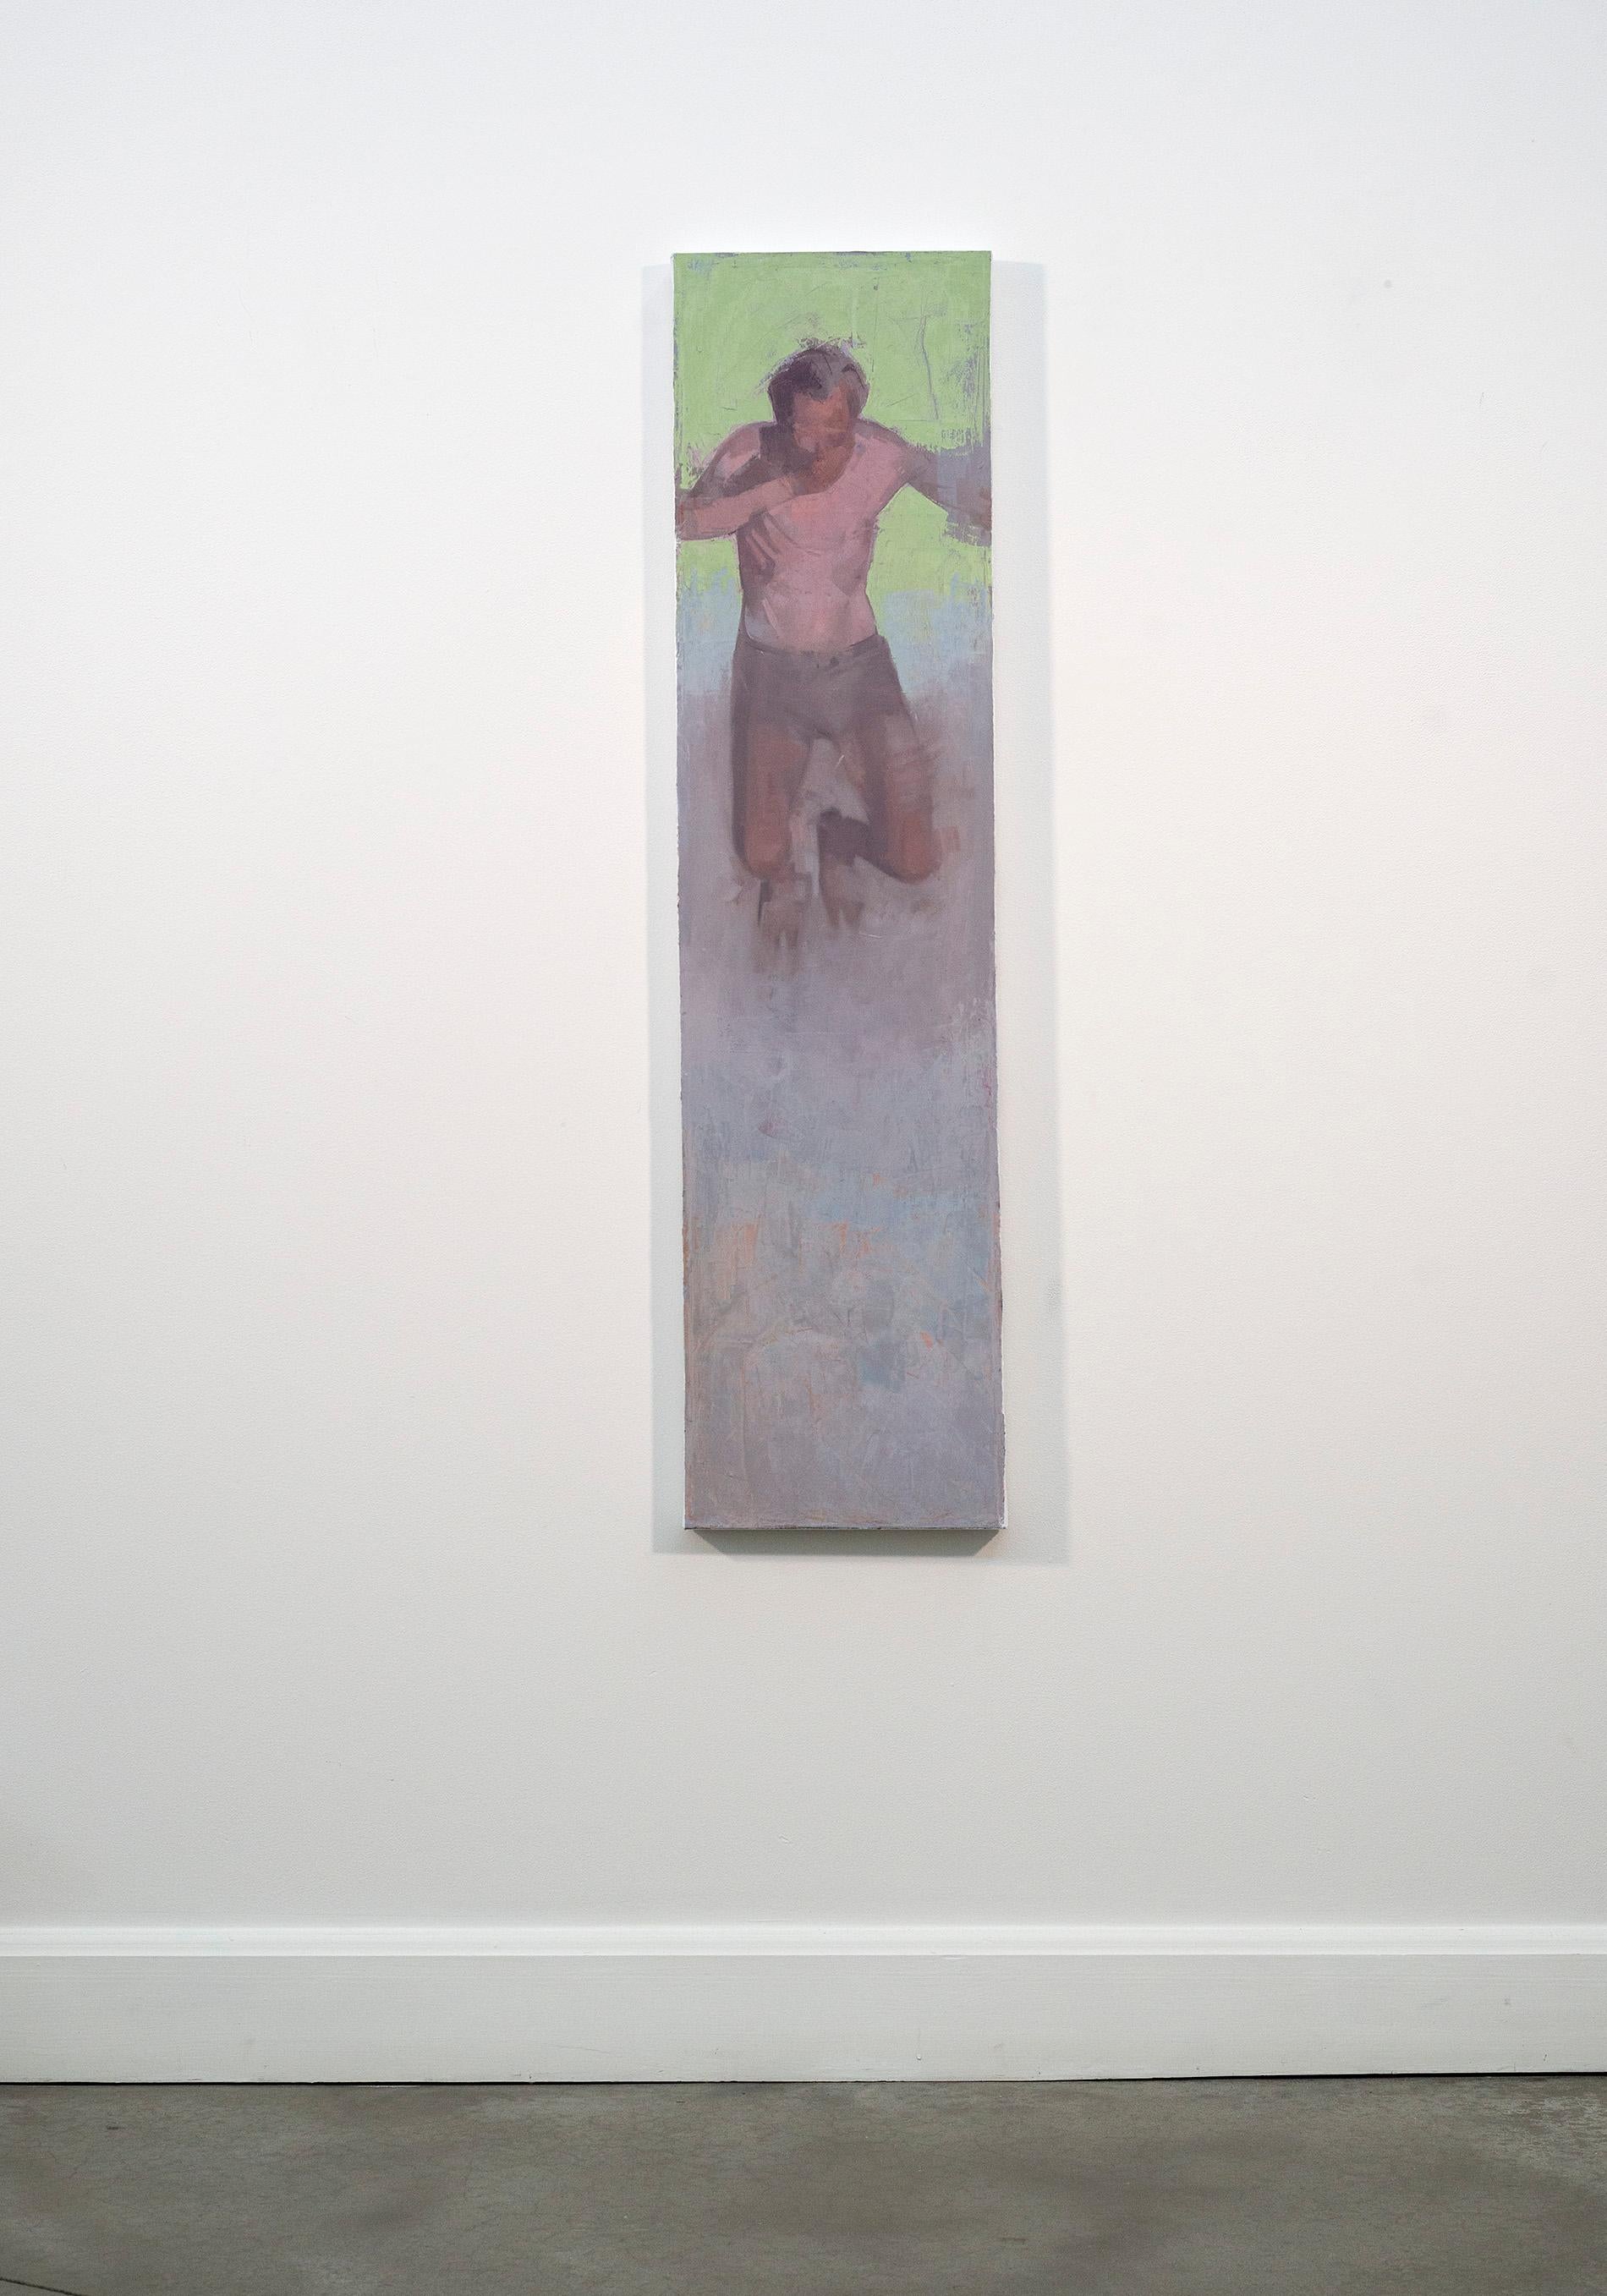 Diver No 1 - green, purple, portrait, male, abstract figurative, oil on canvas For Sale 4